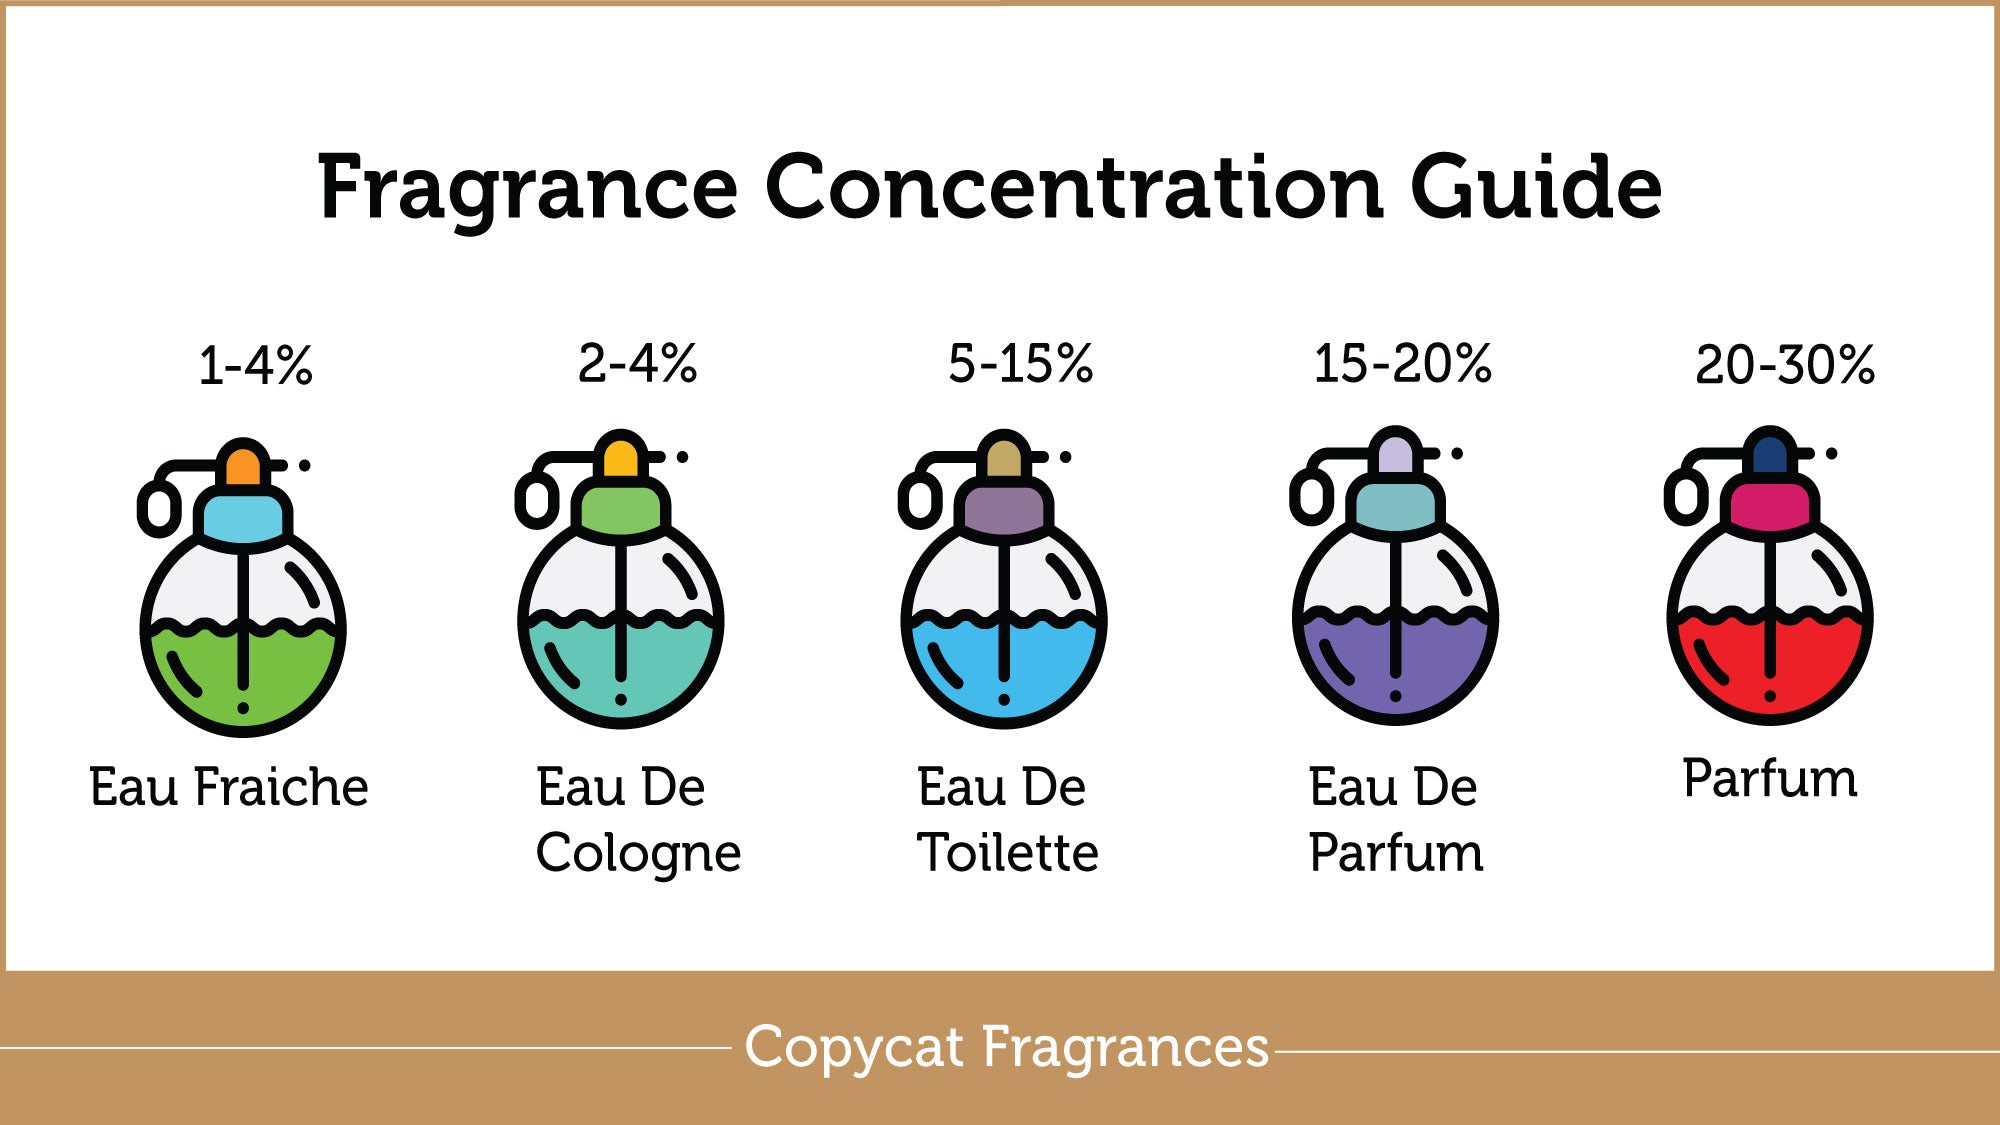 Cologne, Perfume, or Eau de Toilette: A Quick Guide to Fragrance Shopping